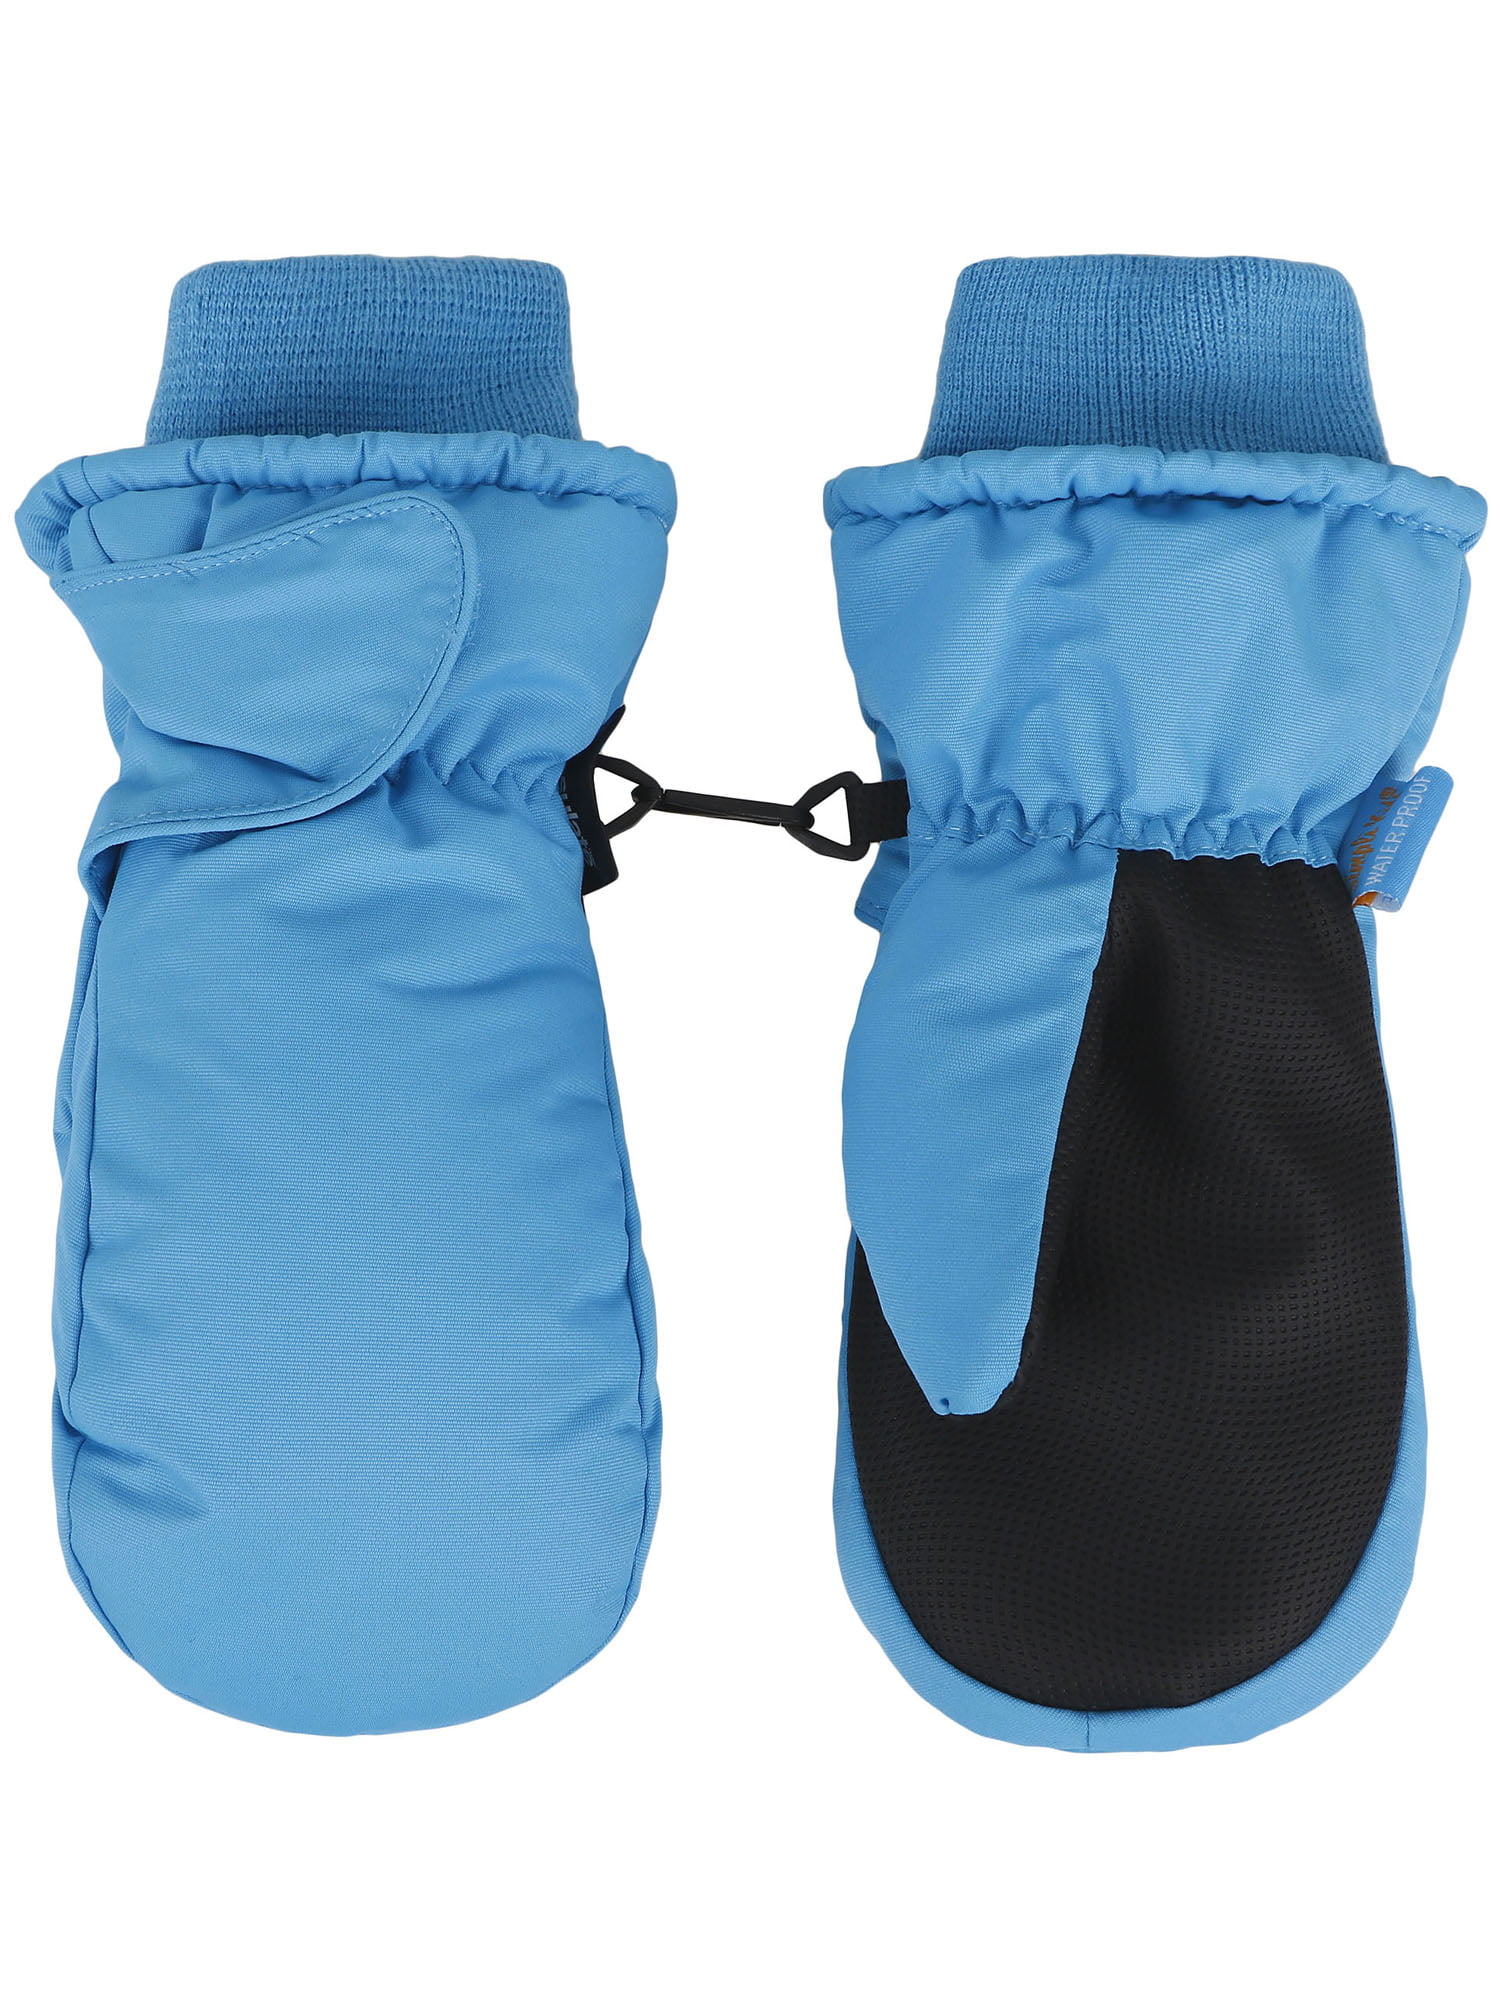 Childrens 3M Thinsulate Waterproof Winter Sports Snow Ski Mittens Gloves